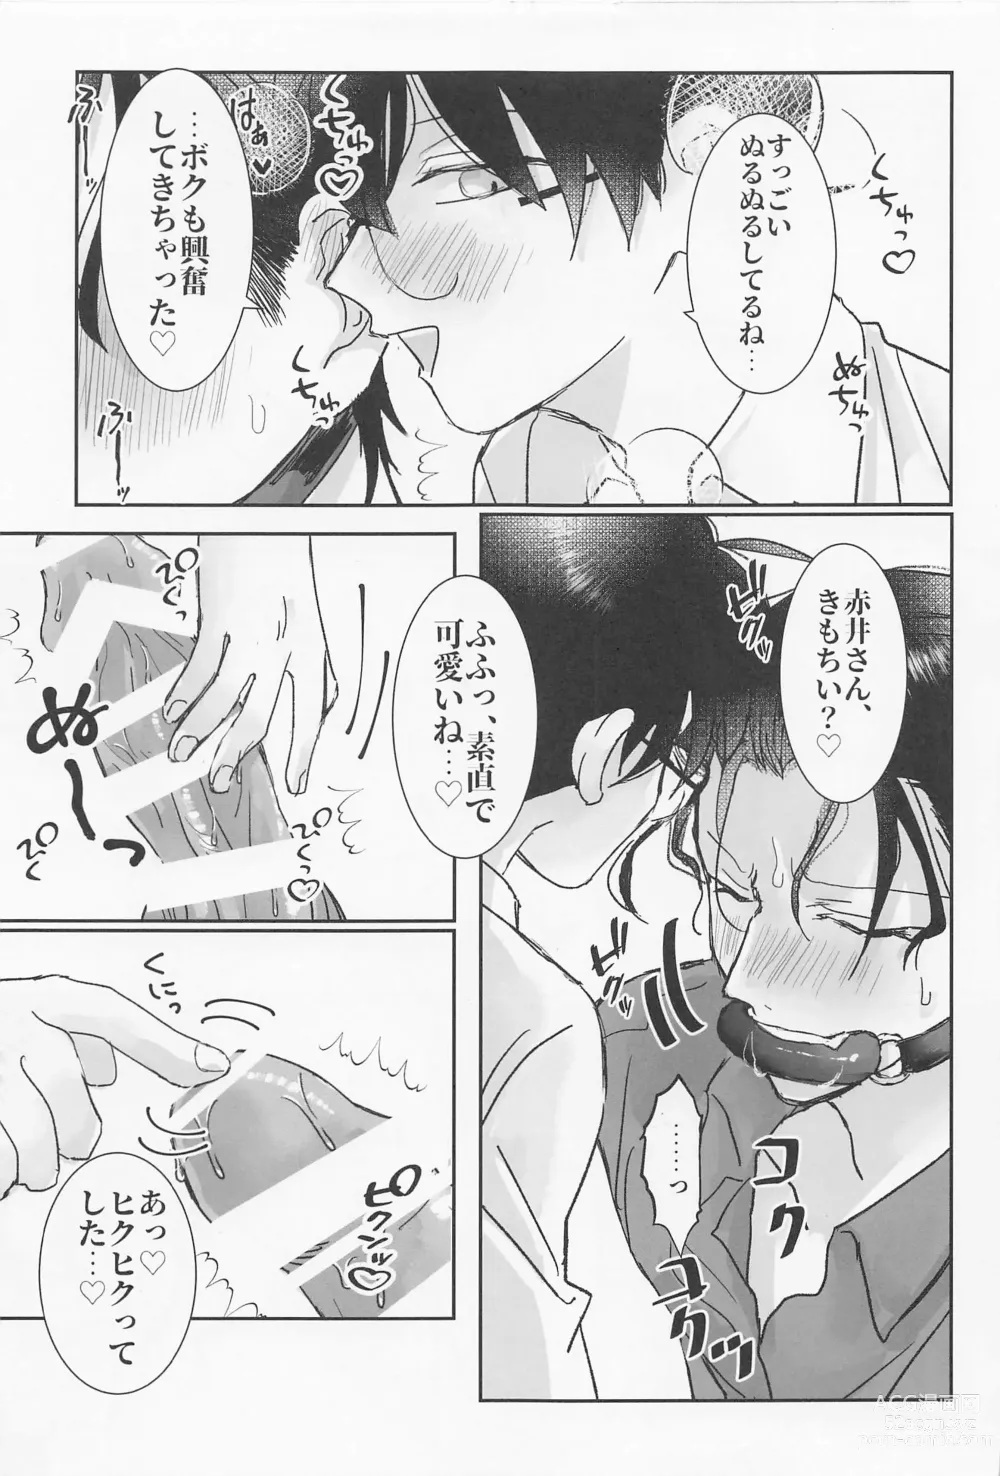 Page 8 of doujinshi Burn.